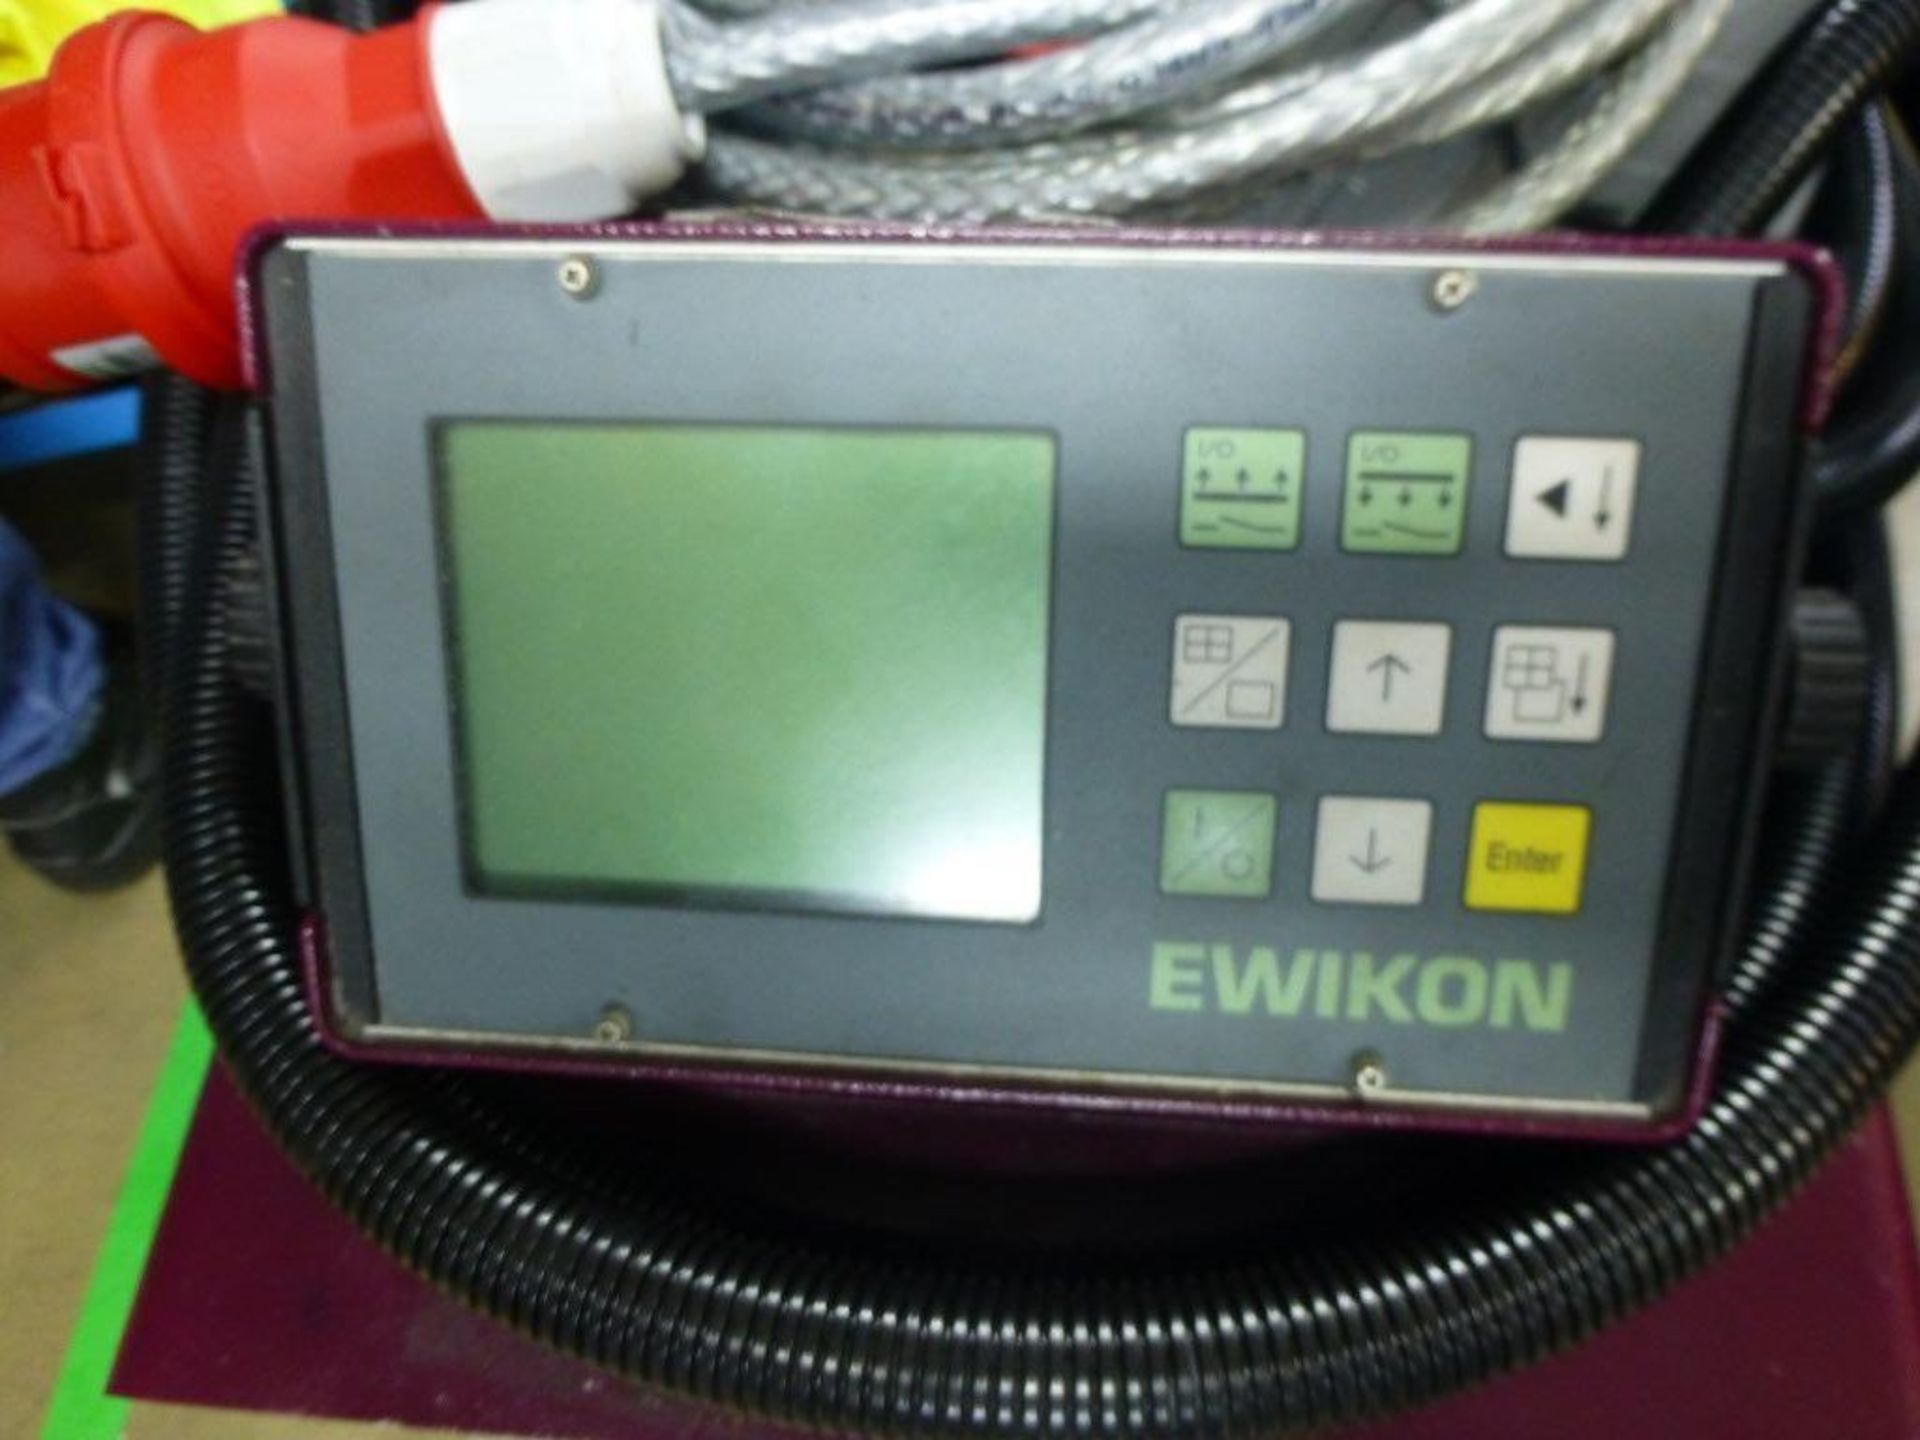 Ewikon 67010.320D temperature controller, Serial No 000015 - Image 2 of 3